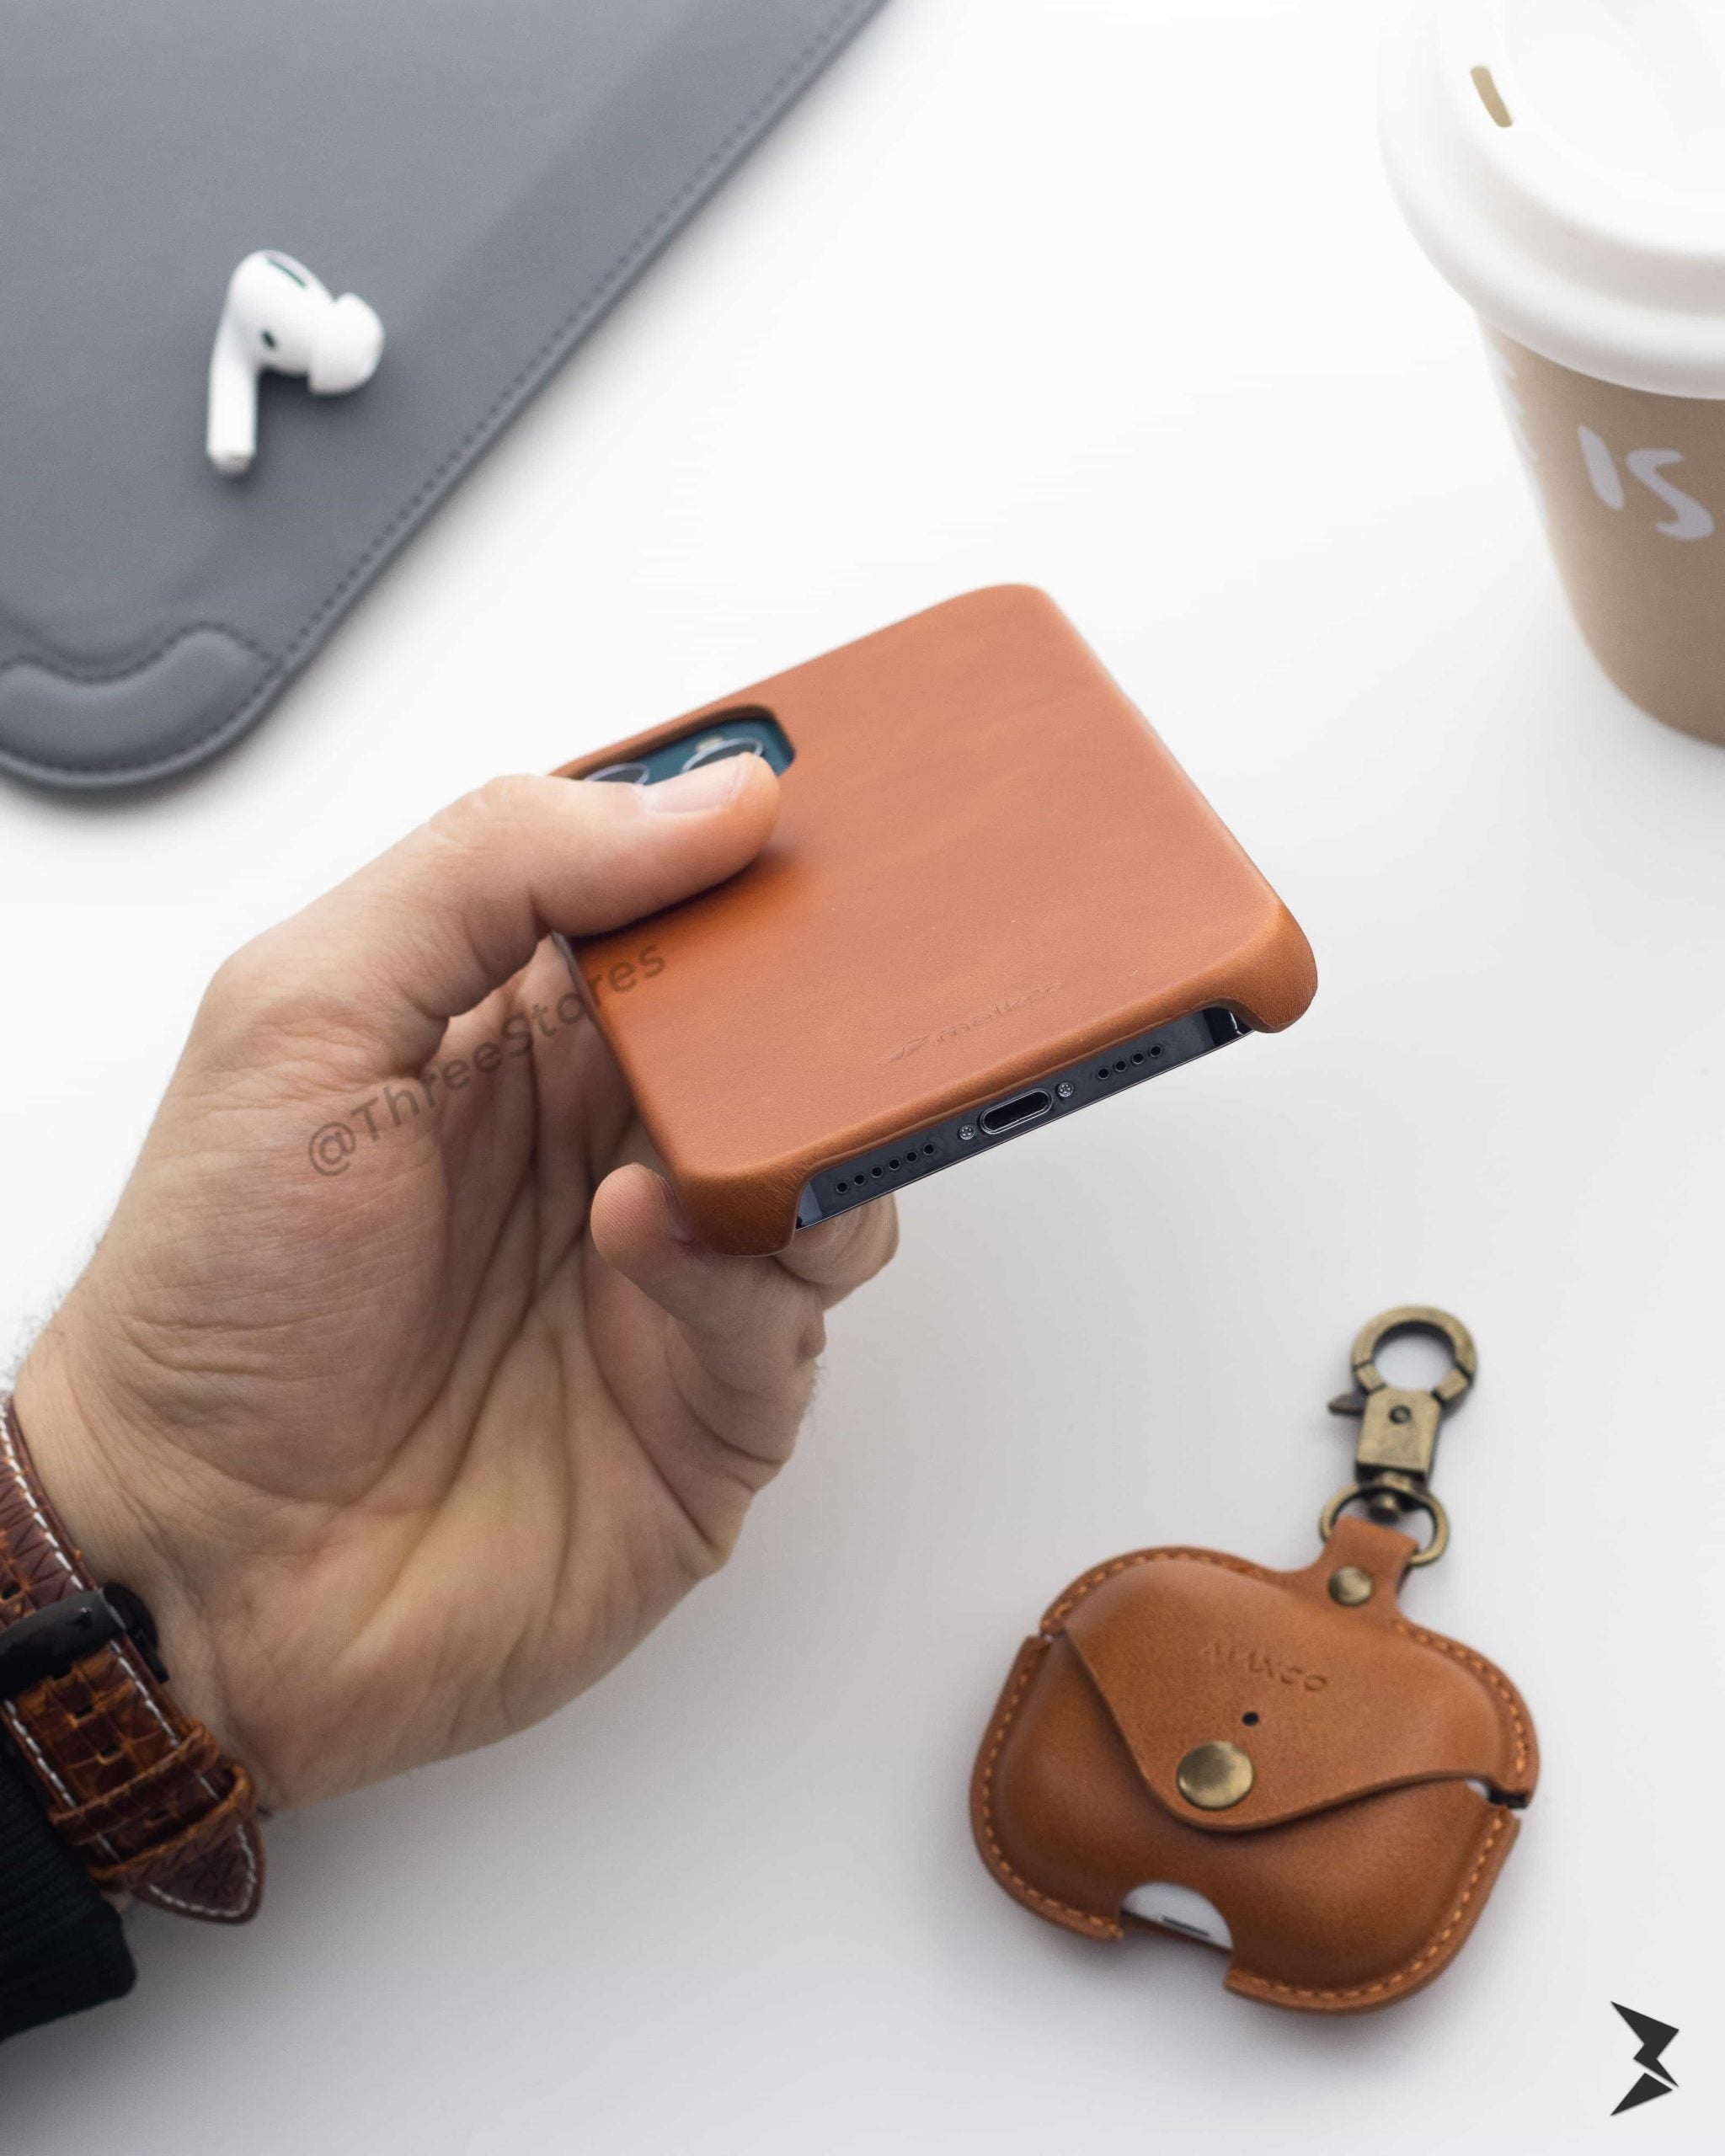 Melkco Slim Leather Case iPhone 11 Pro Max